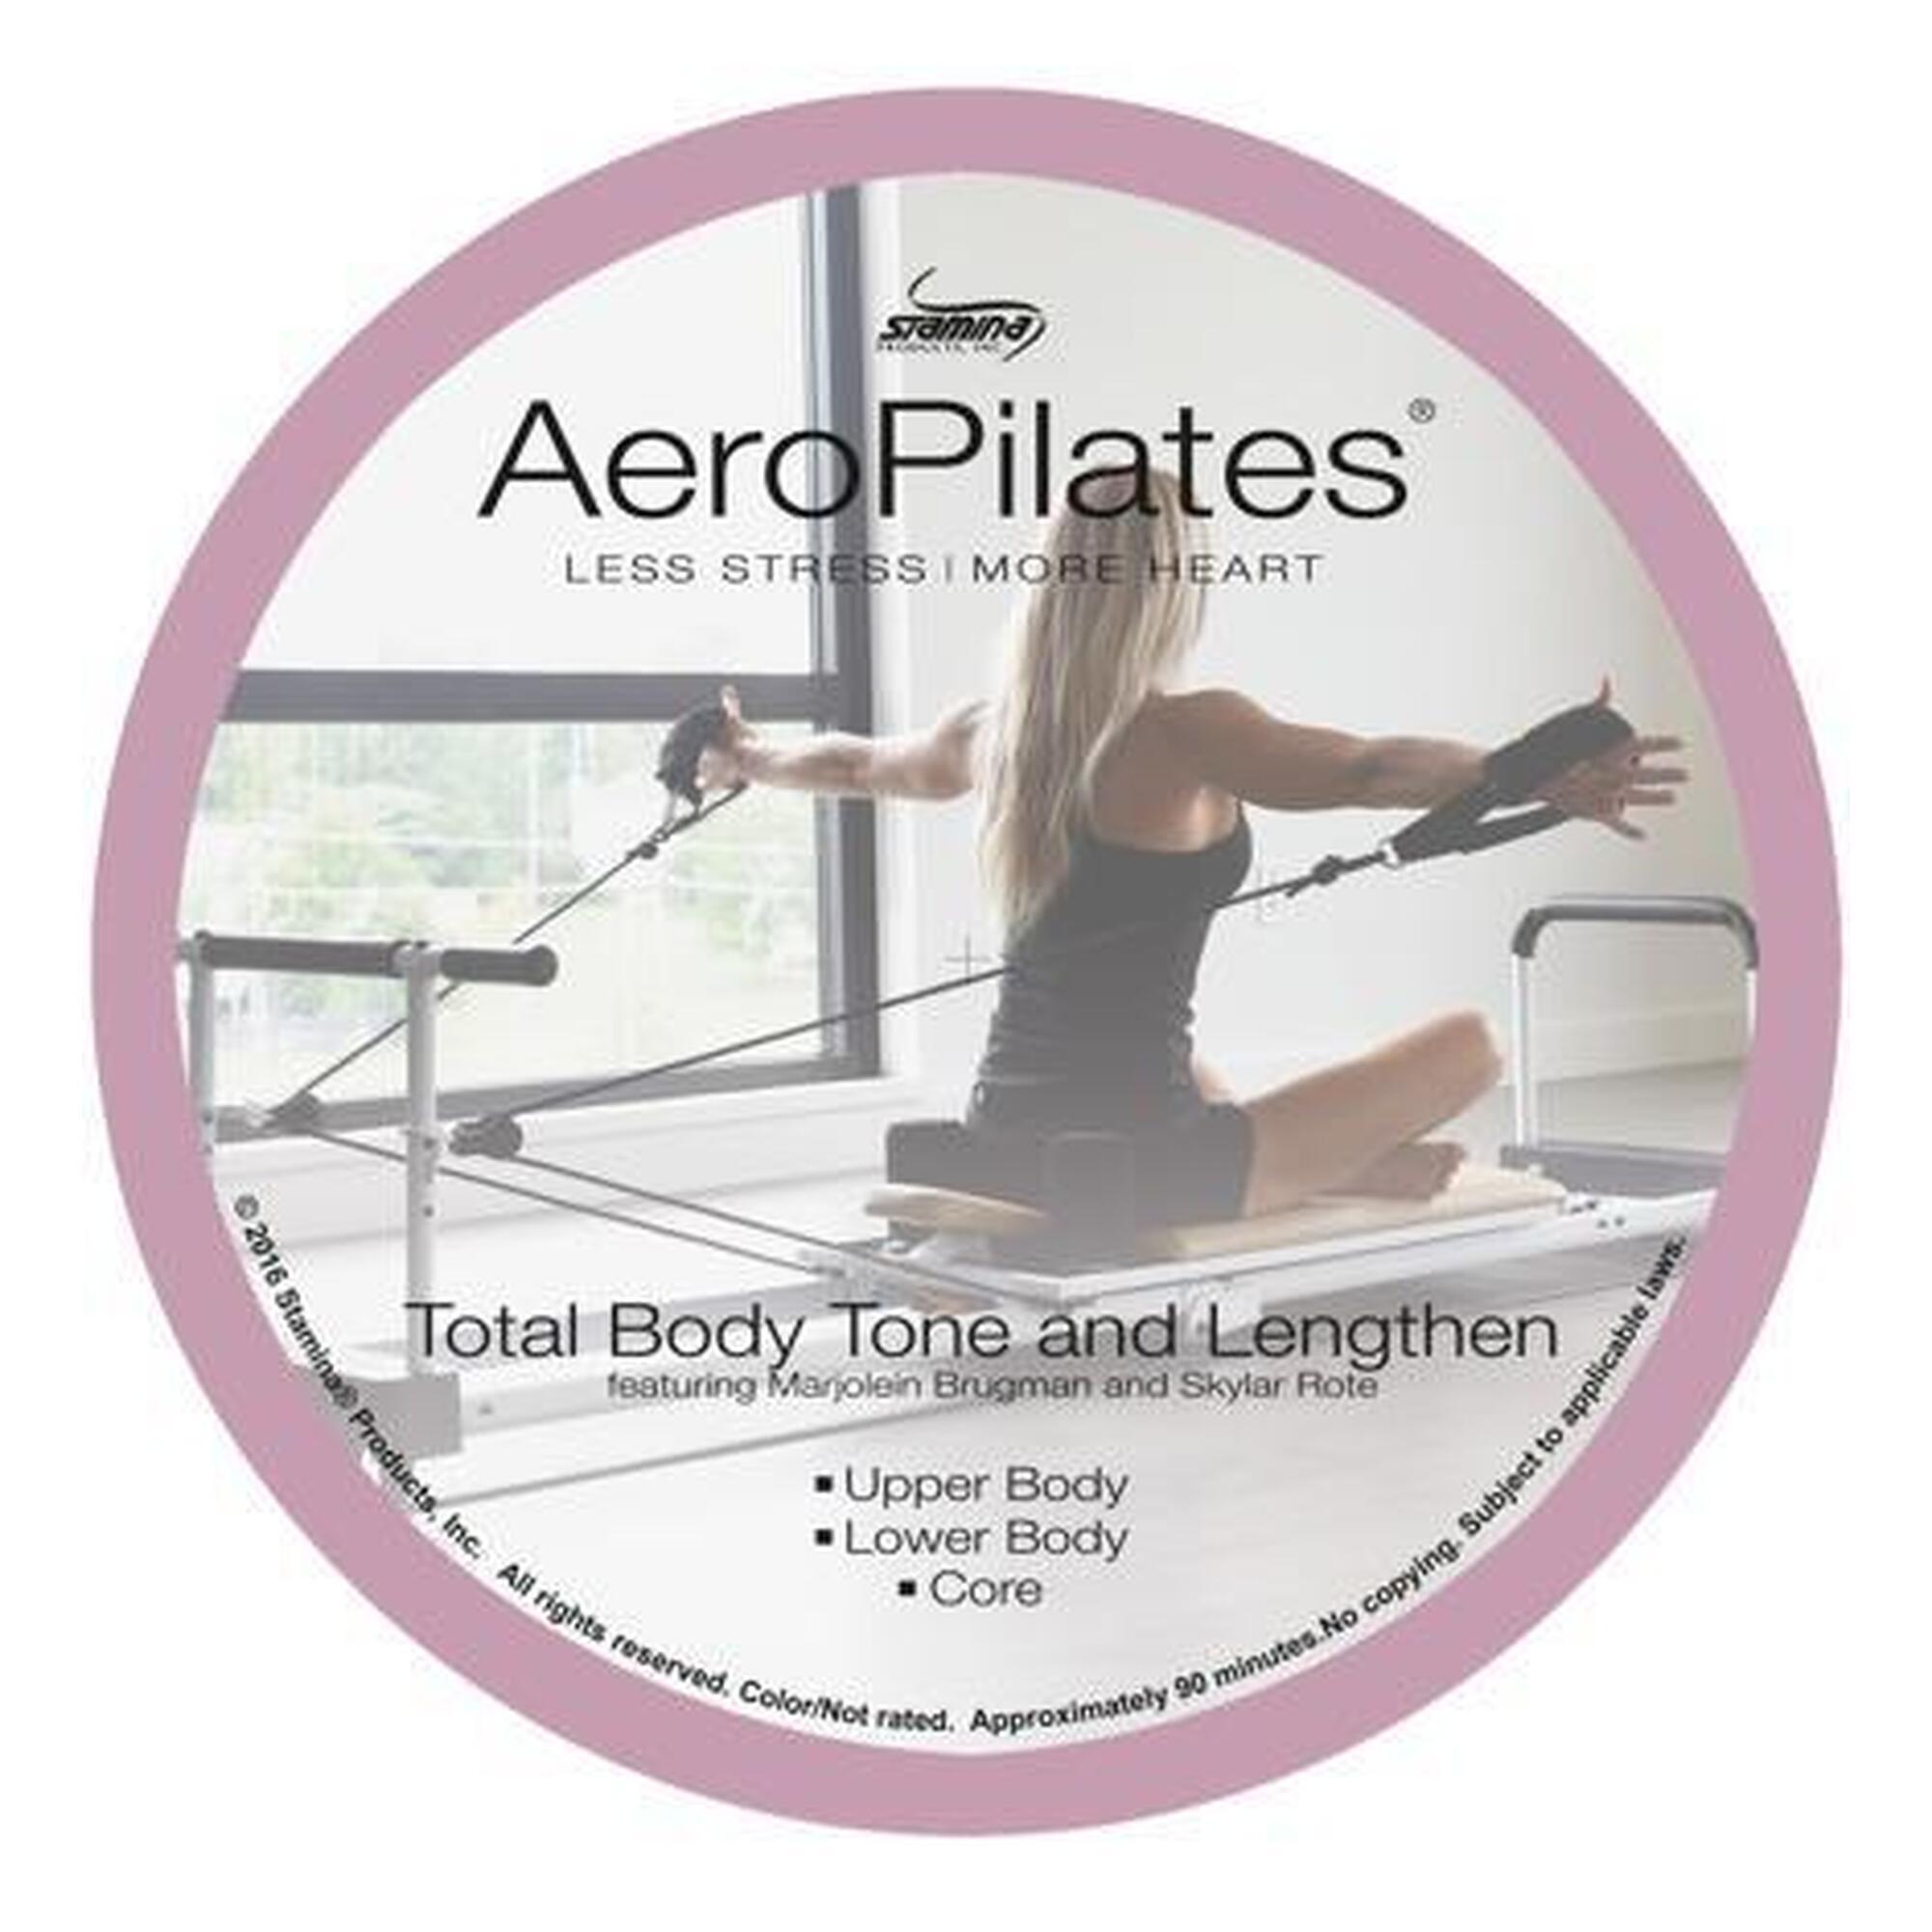 AeroPilates Pilates Total Body , Tone and Lengthen workout DVD - New Series 1/1